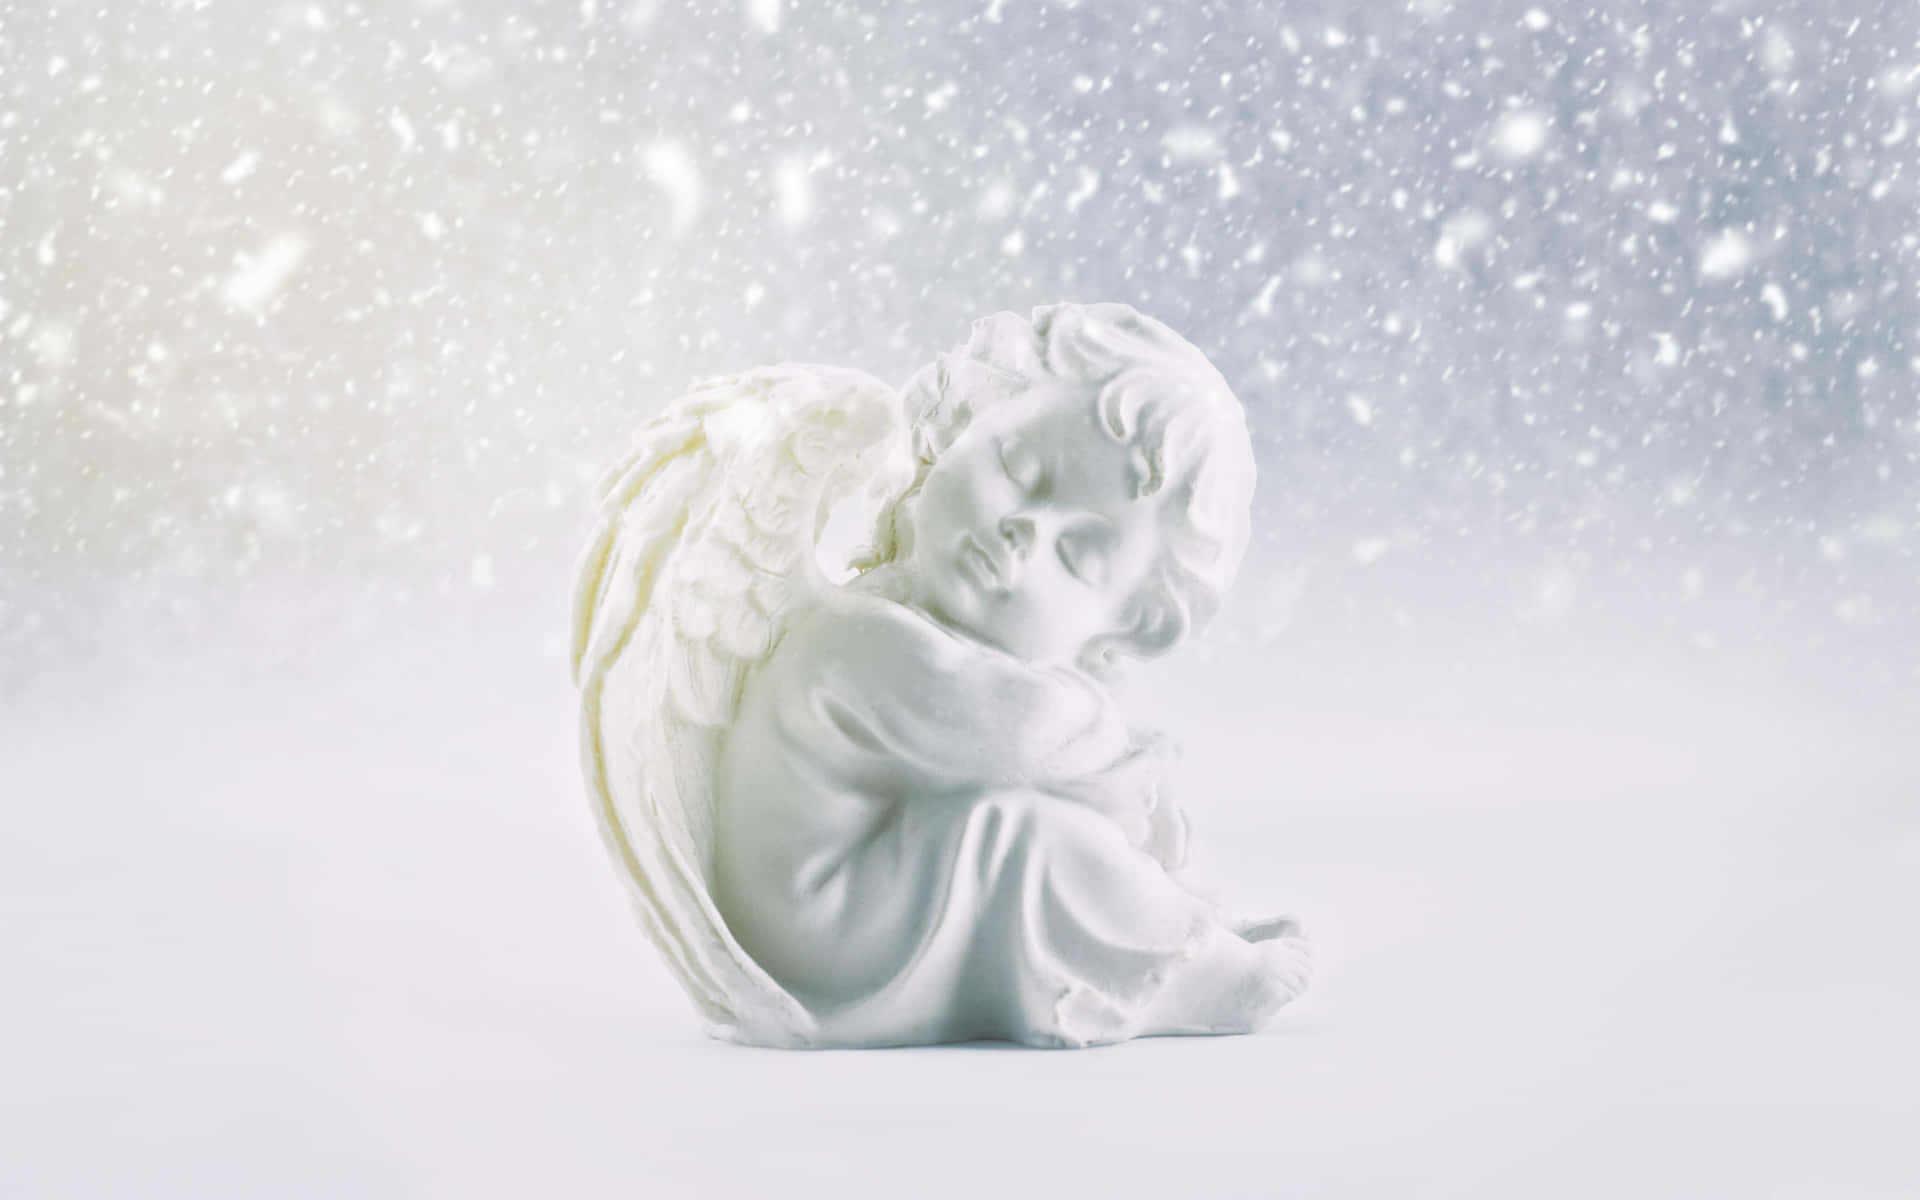 A Beautiful Snow Angel in Winter Wonderland Wallpaper